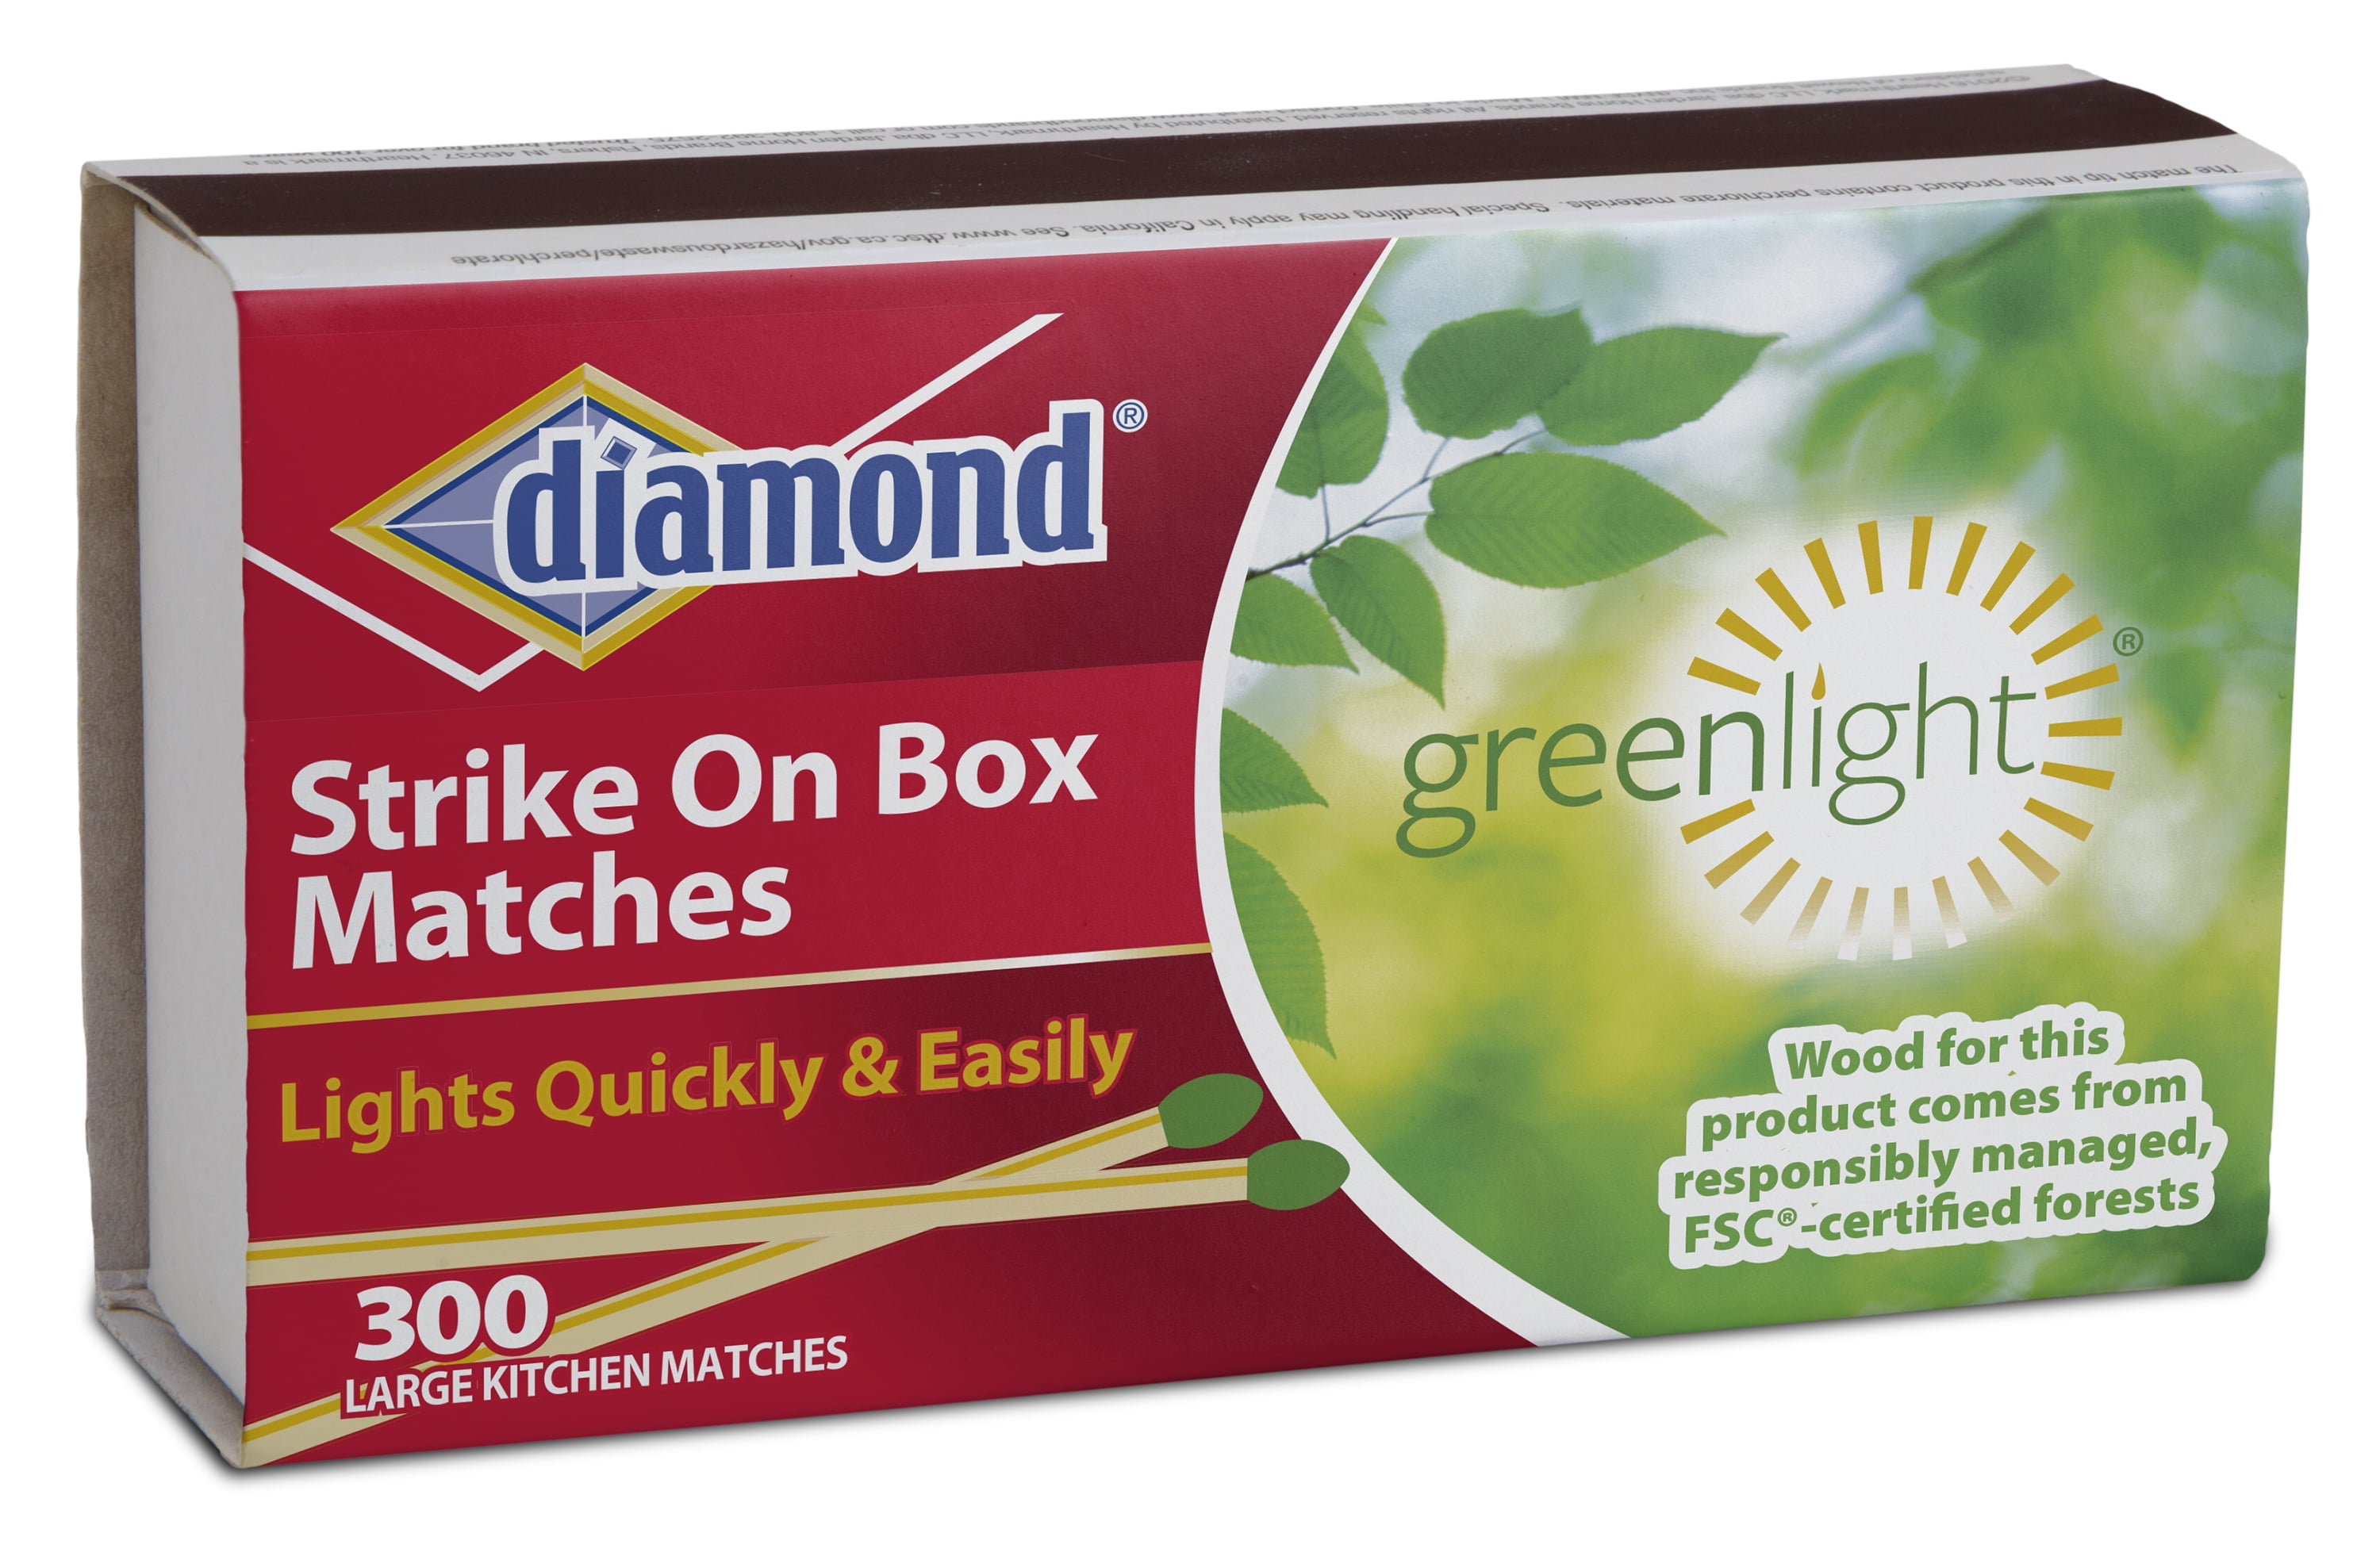 Diamond Green Light Wooden Match, Strike On Box, 300 Count